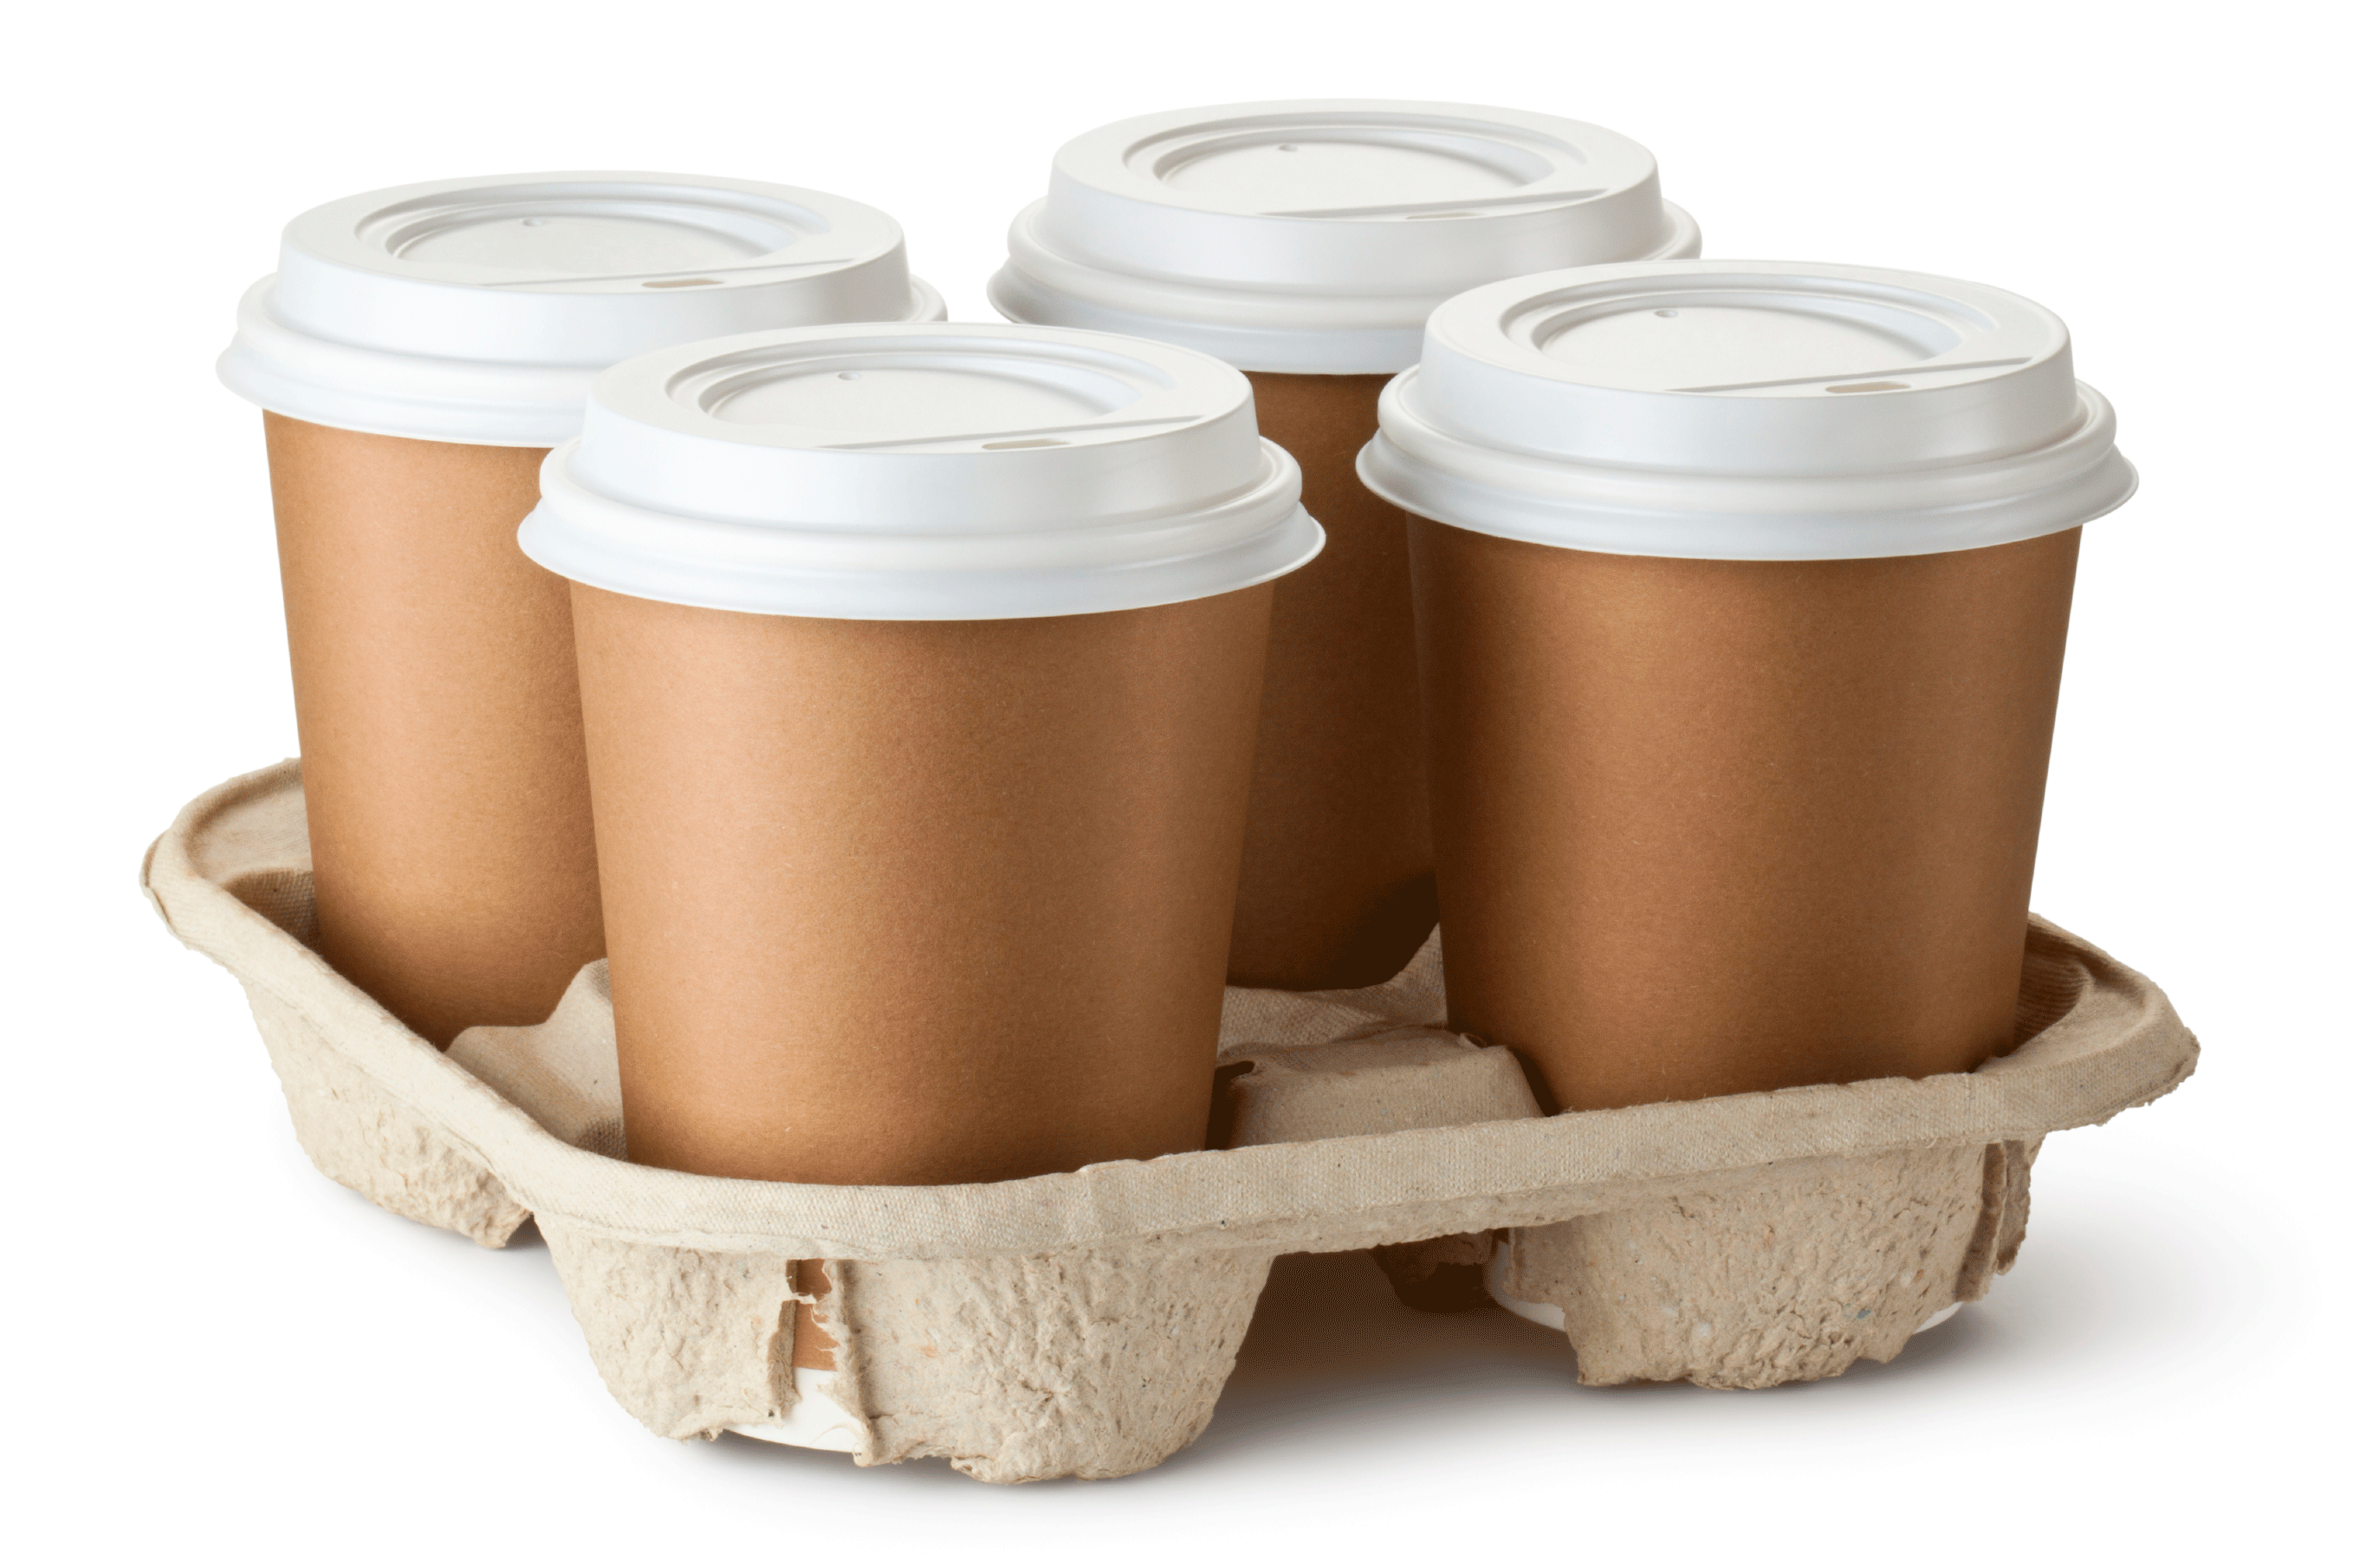 021512-coffee-cup-ecycling.gif (2716×1810)